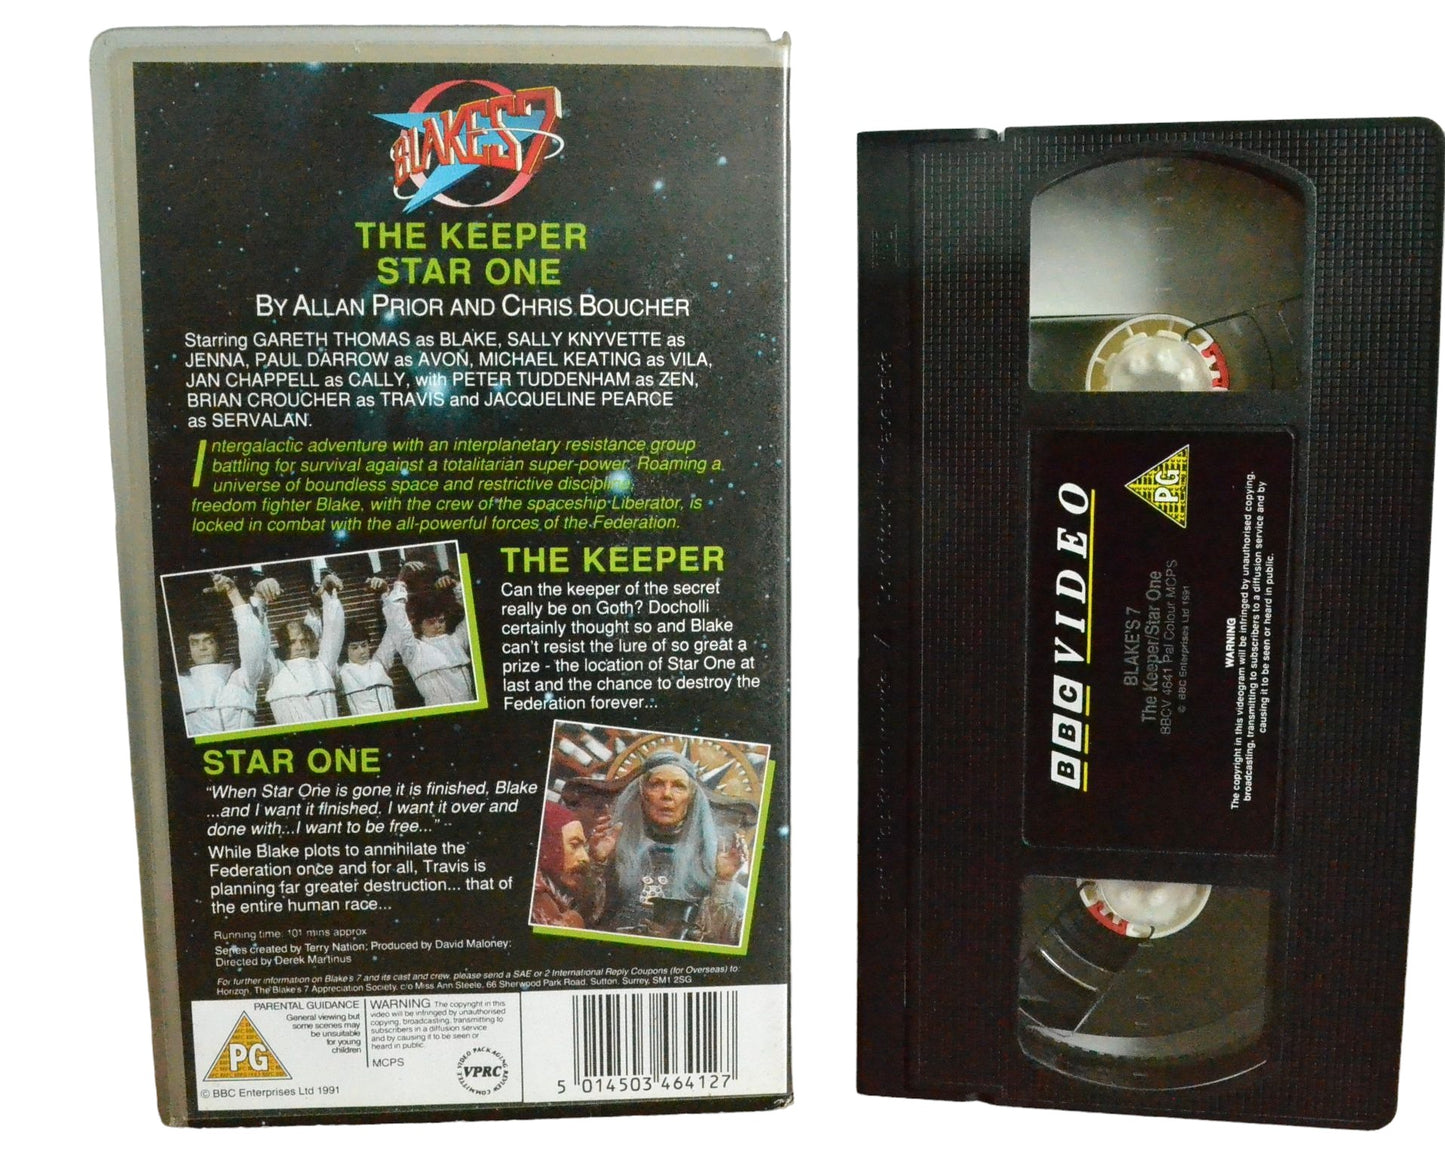 Blake's 7 : The Keeper / Star One - Gareth Thomas - BBC Video - BBCV4641 - Sci-Fi - Pal - VHS-